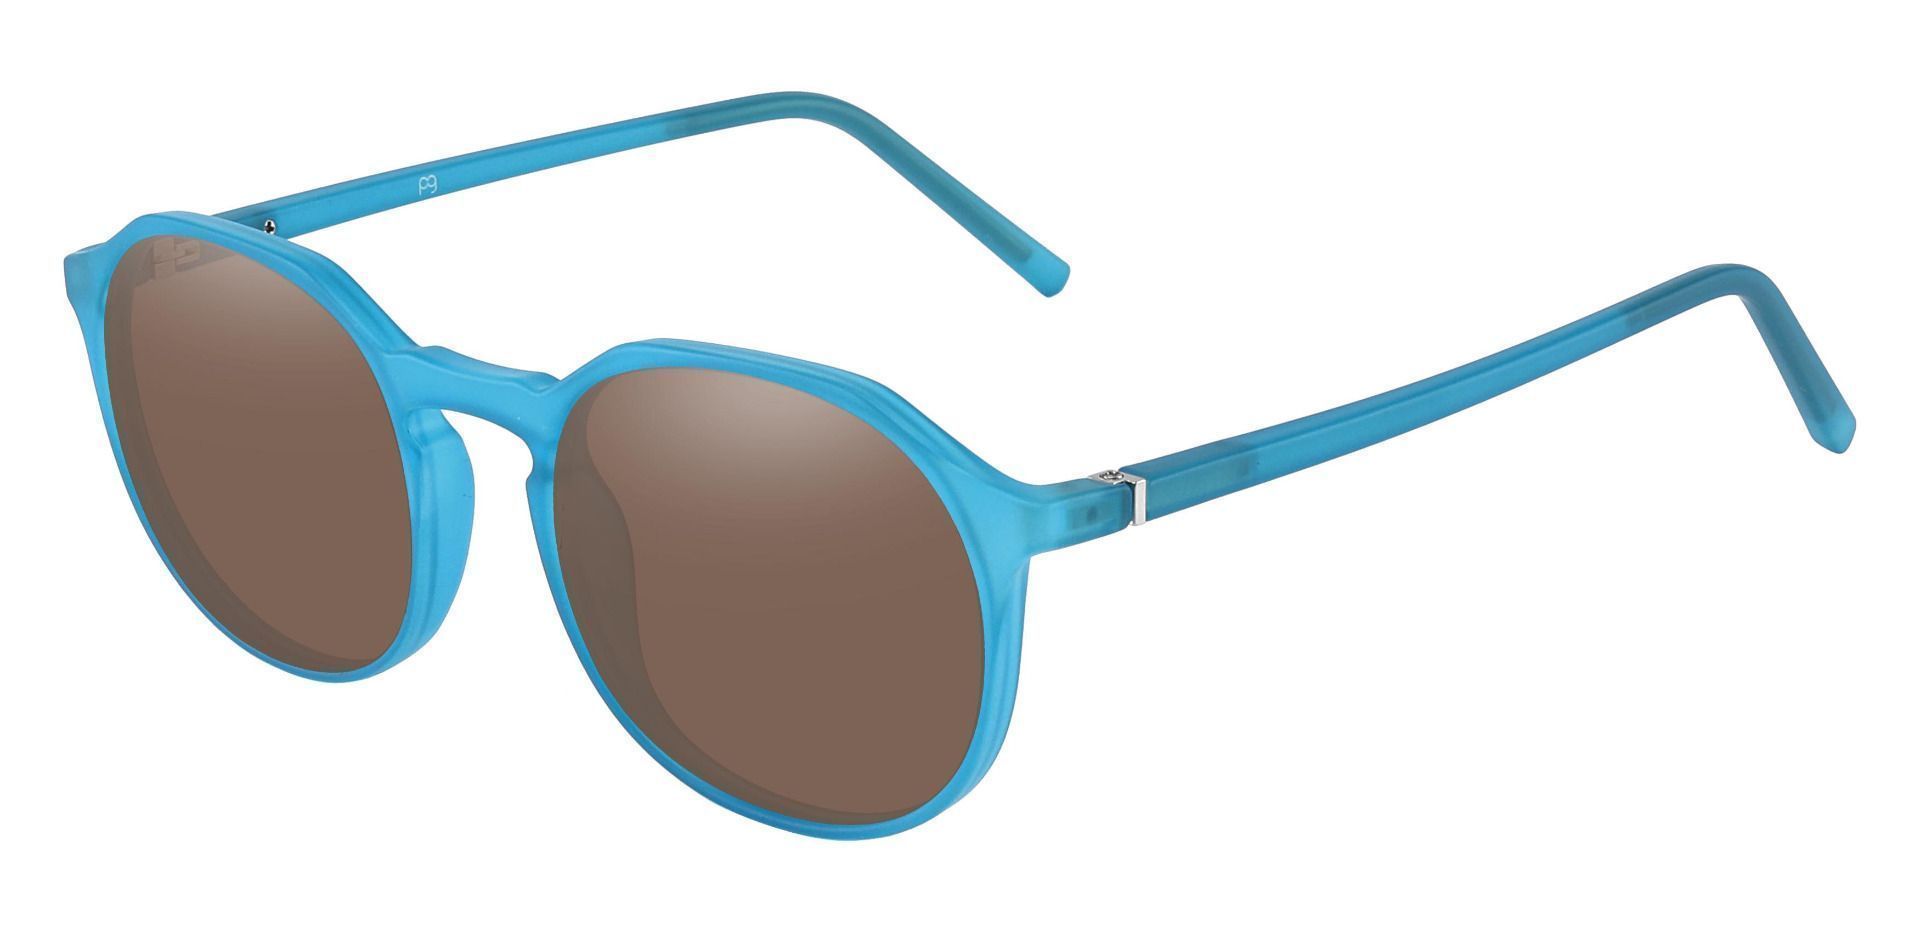 Belvidere Geometric Progressive Sunglasses - Blue Frame With Brown Lenses